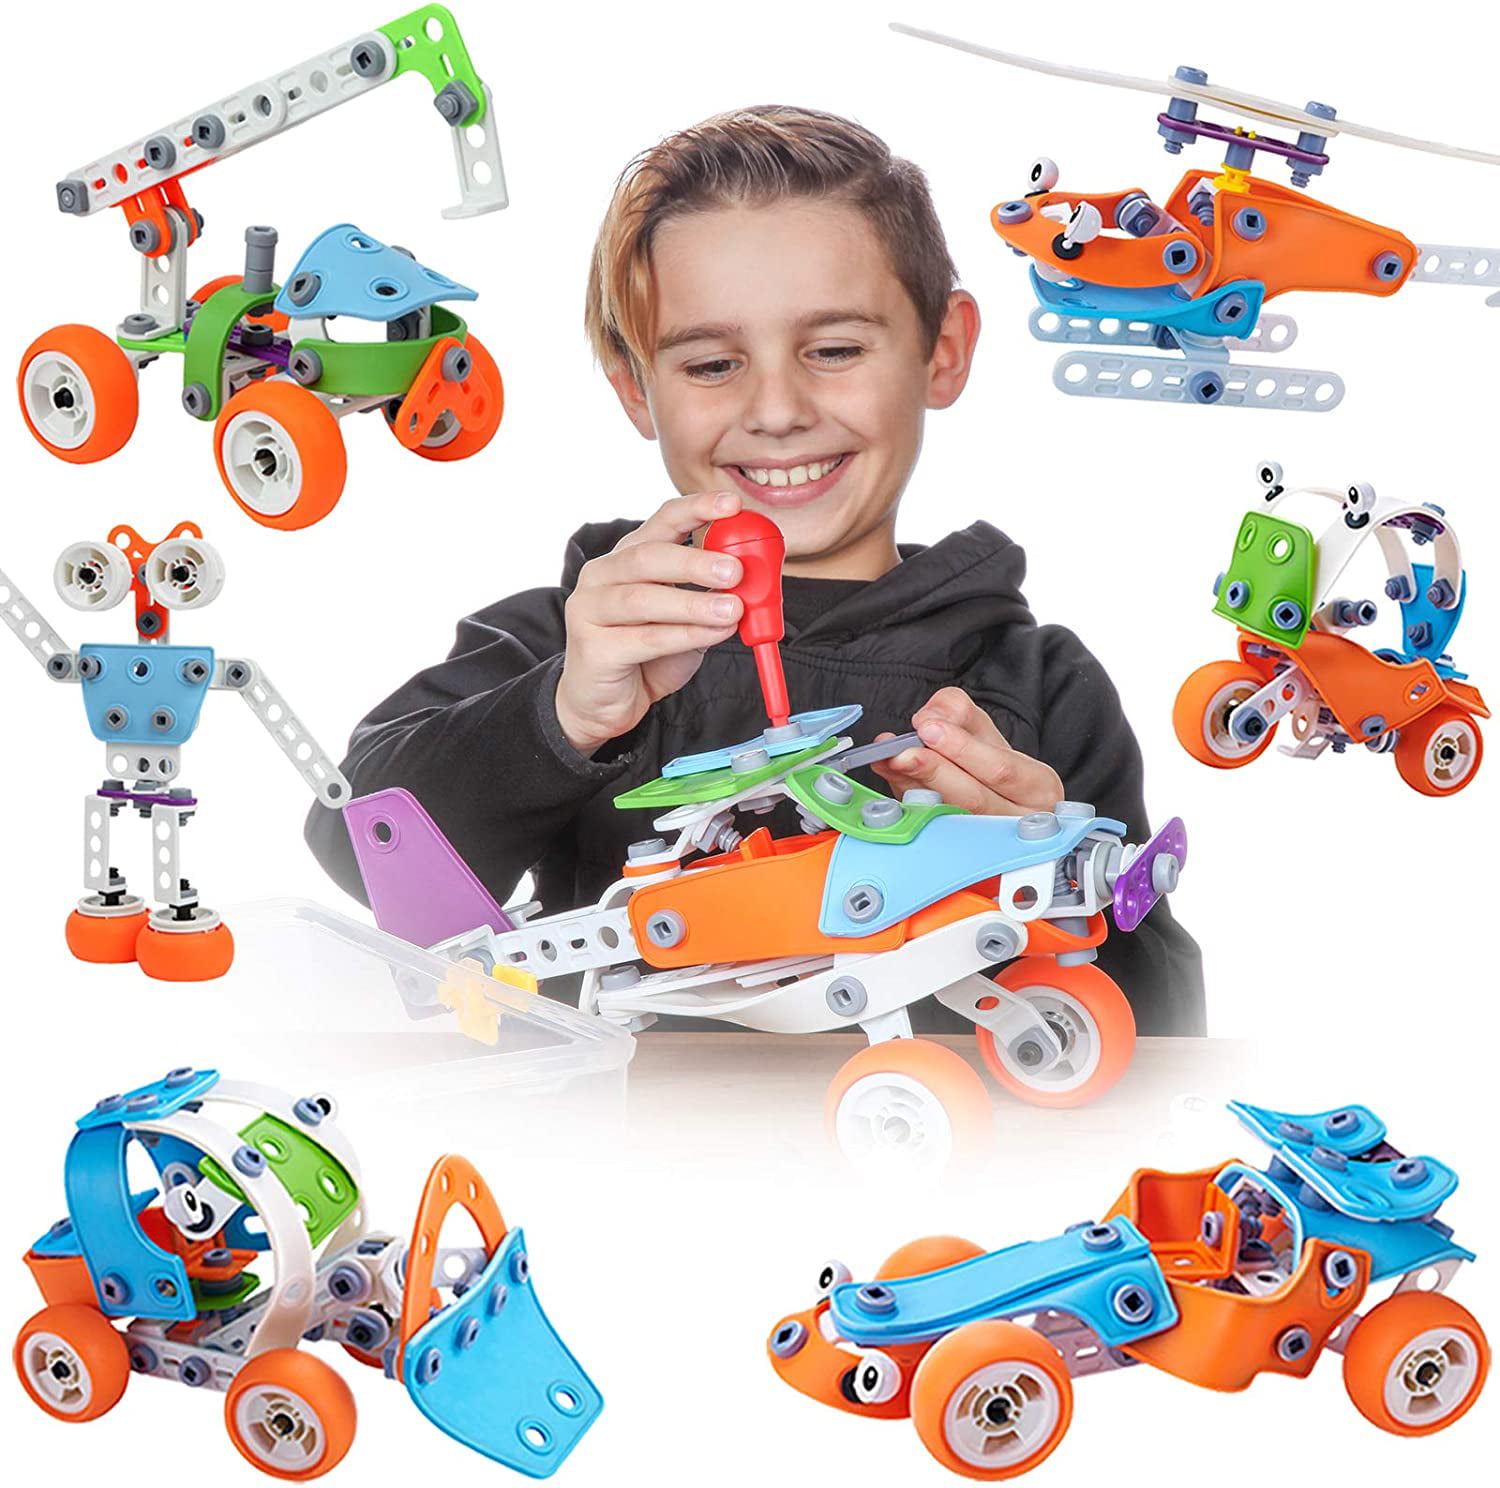 Building Blocks 100 Set Toys Gift for Boys & Girls Stem Educational Fun for sale online 